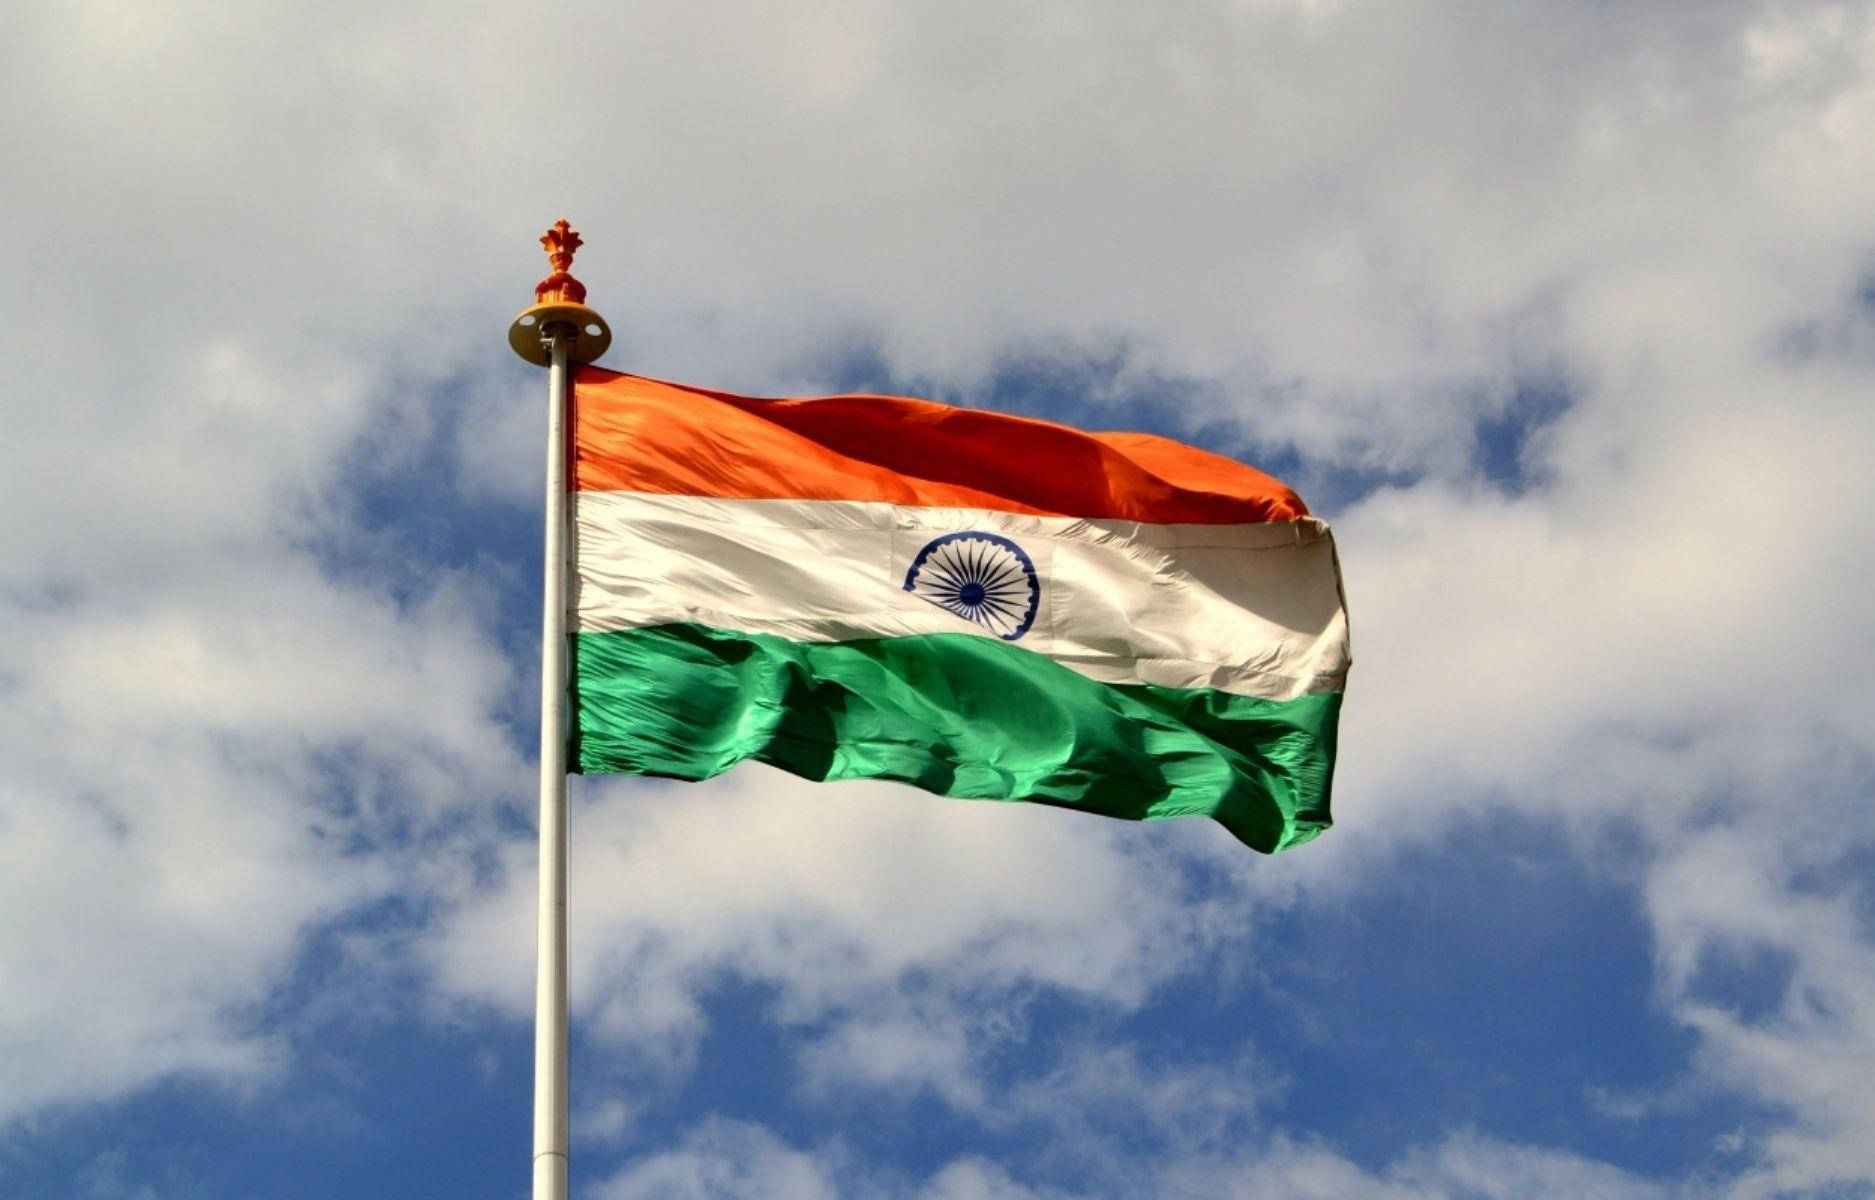 Free Indian Flag Hd Wallpaper Downloads, [100+] Indian Flag Hd Wallpapers  for FREE 